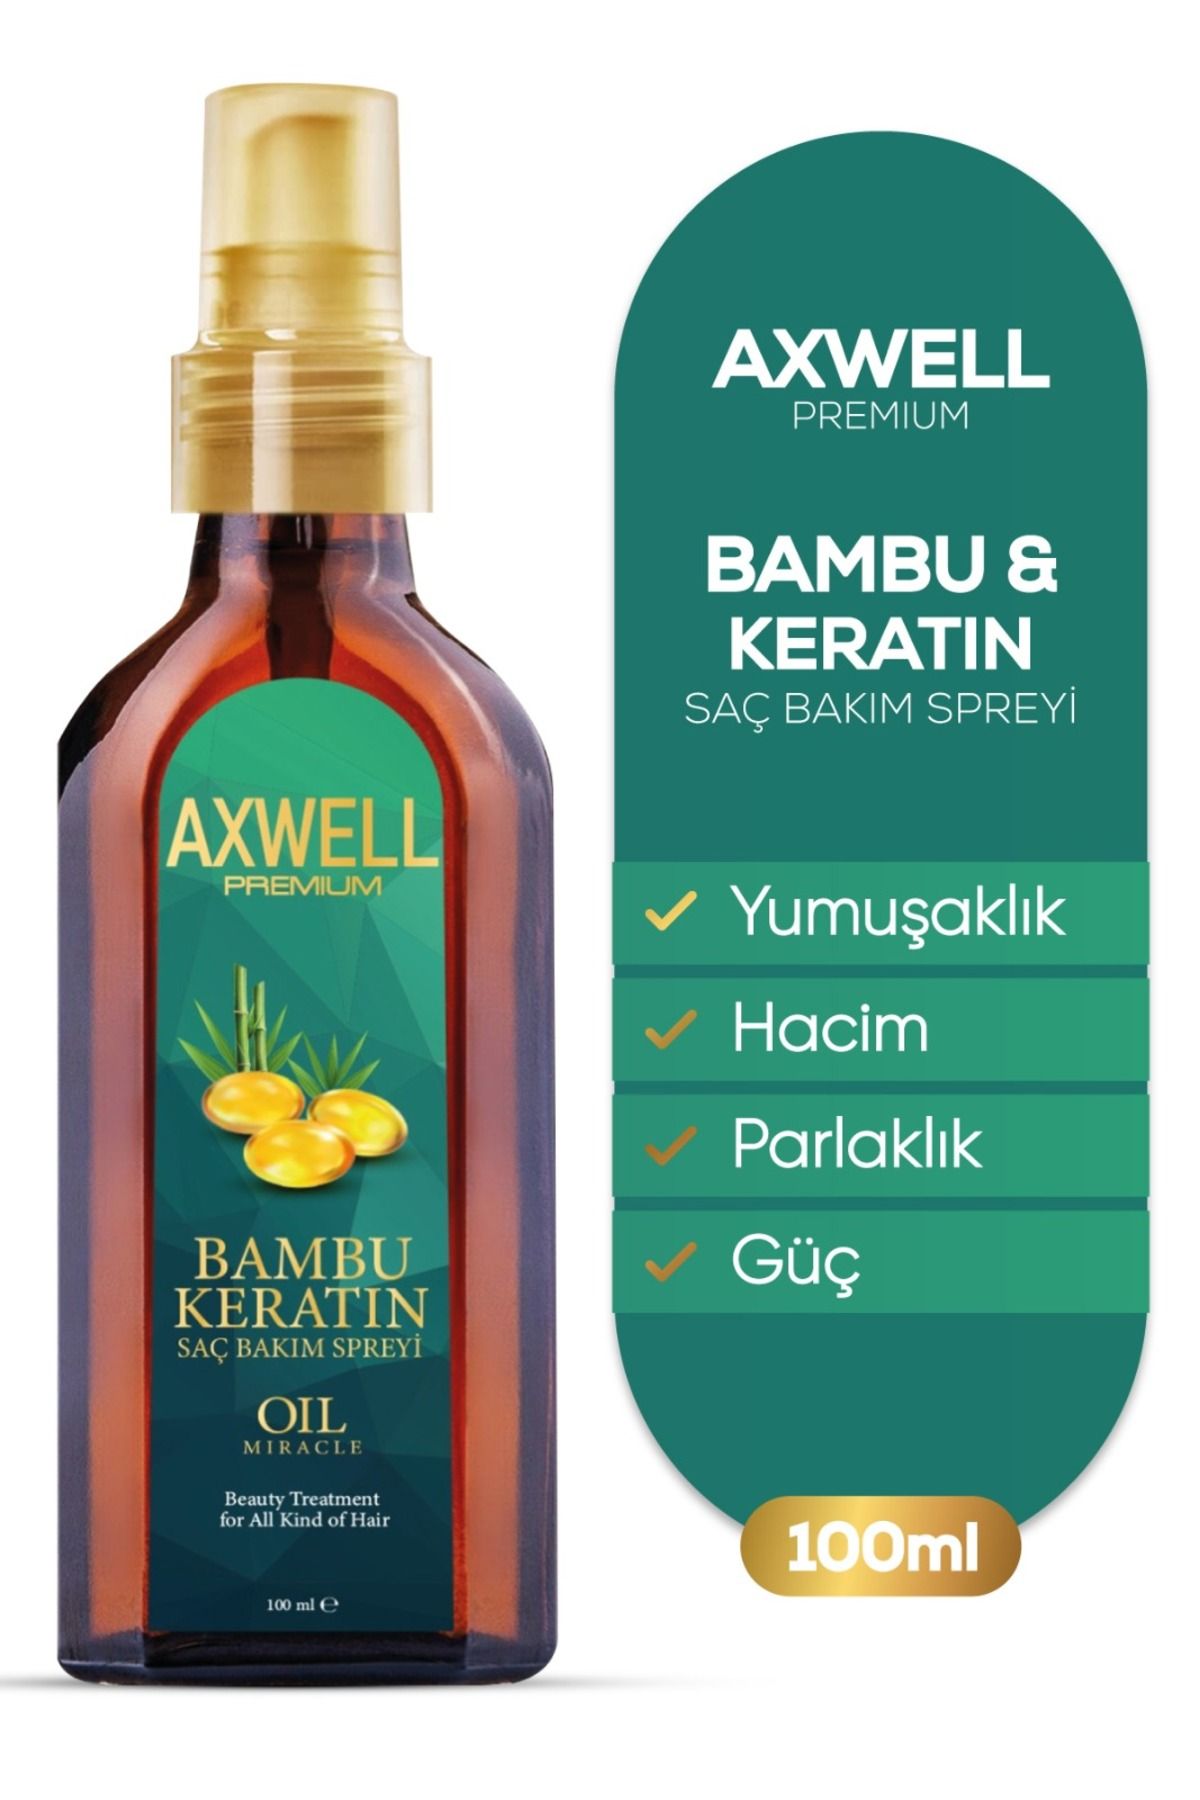 AXWELL PREMIUM Premium Bambu& Keratin Saç Bakım Spreyi- 100ml